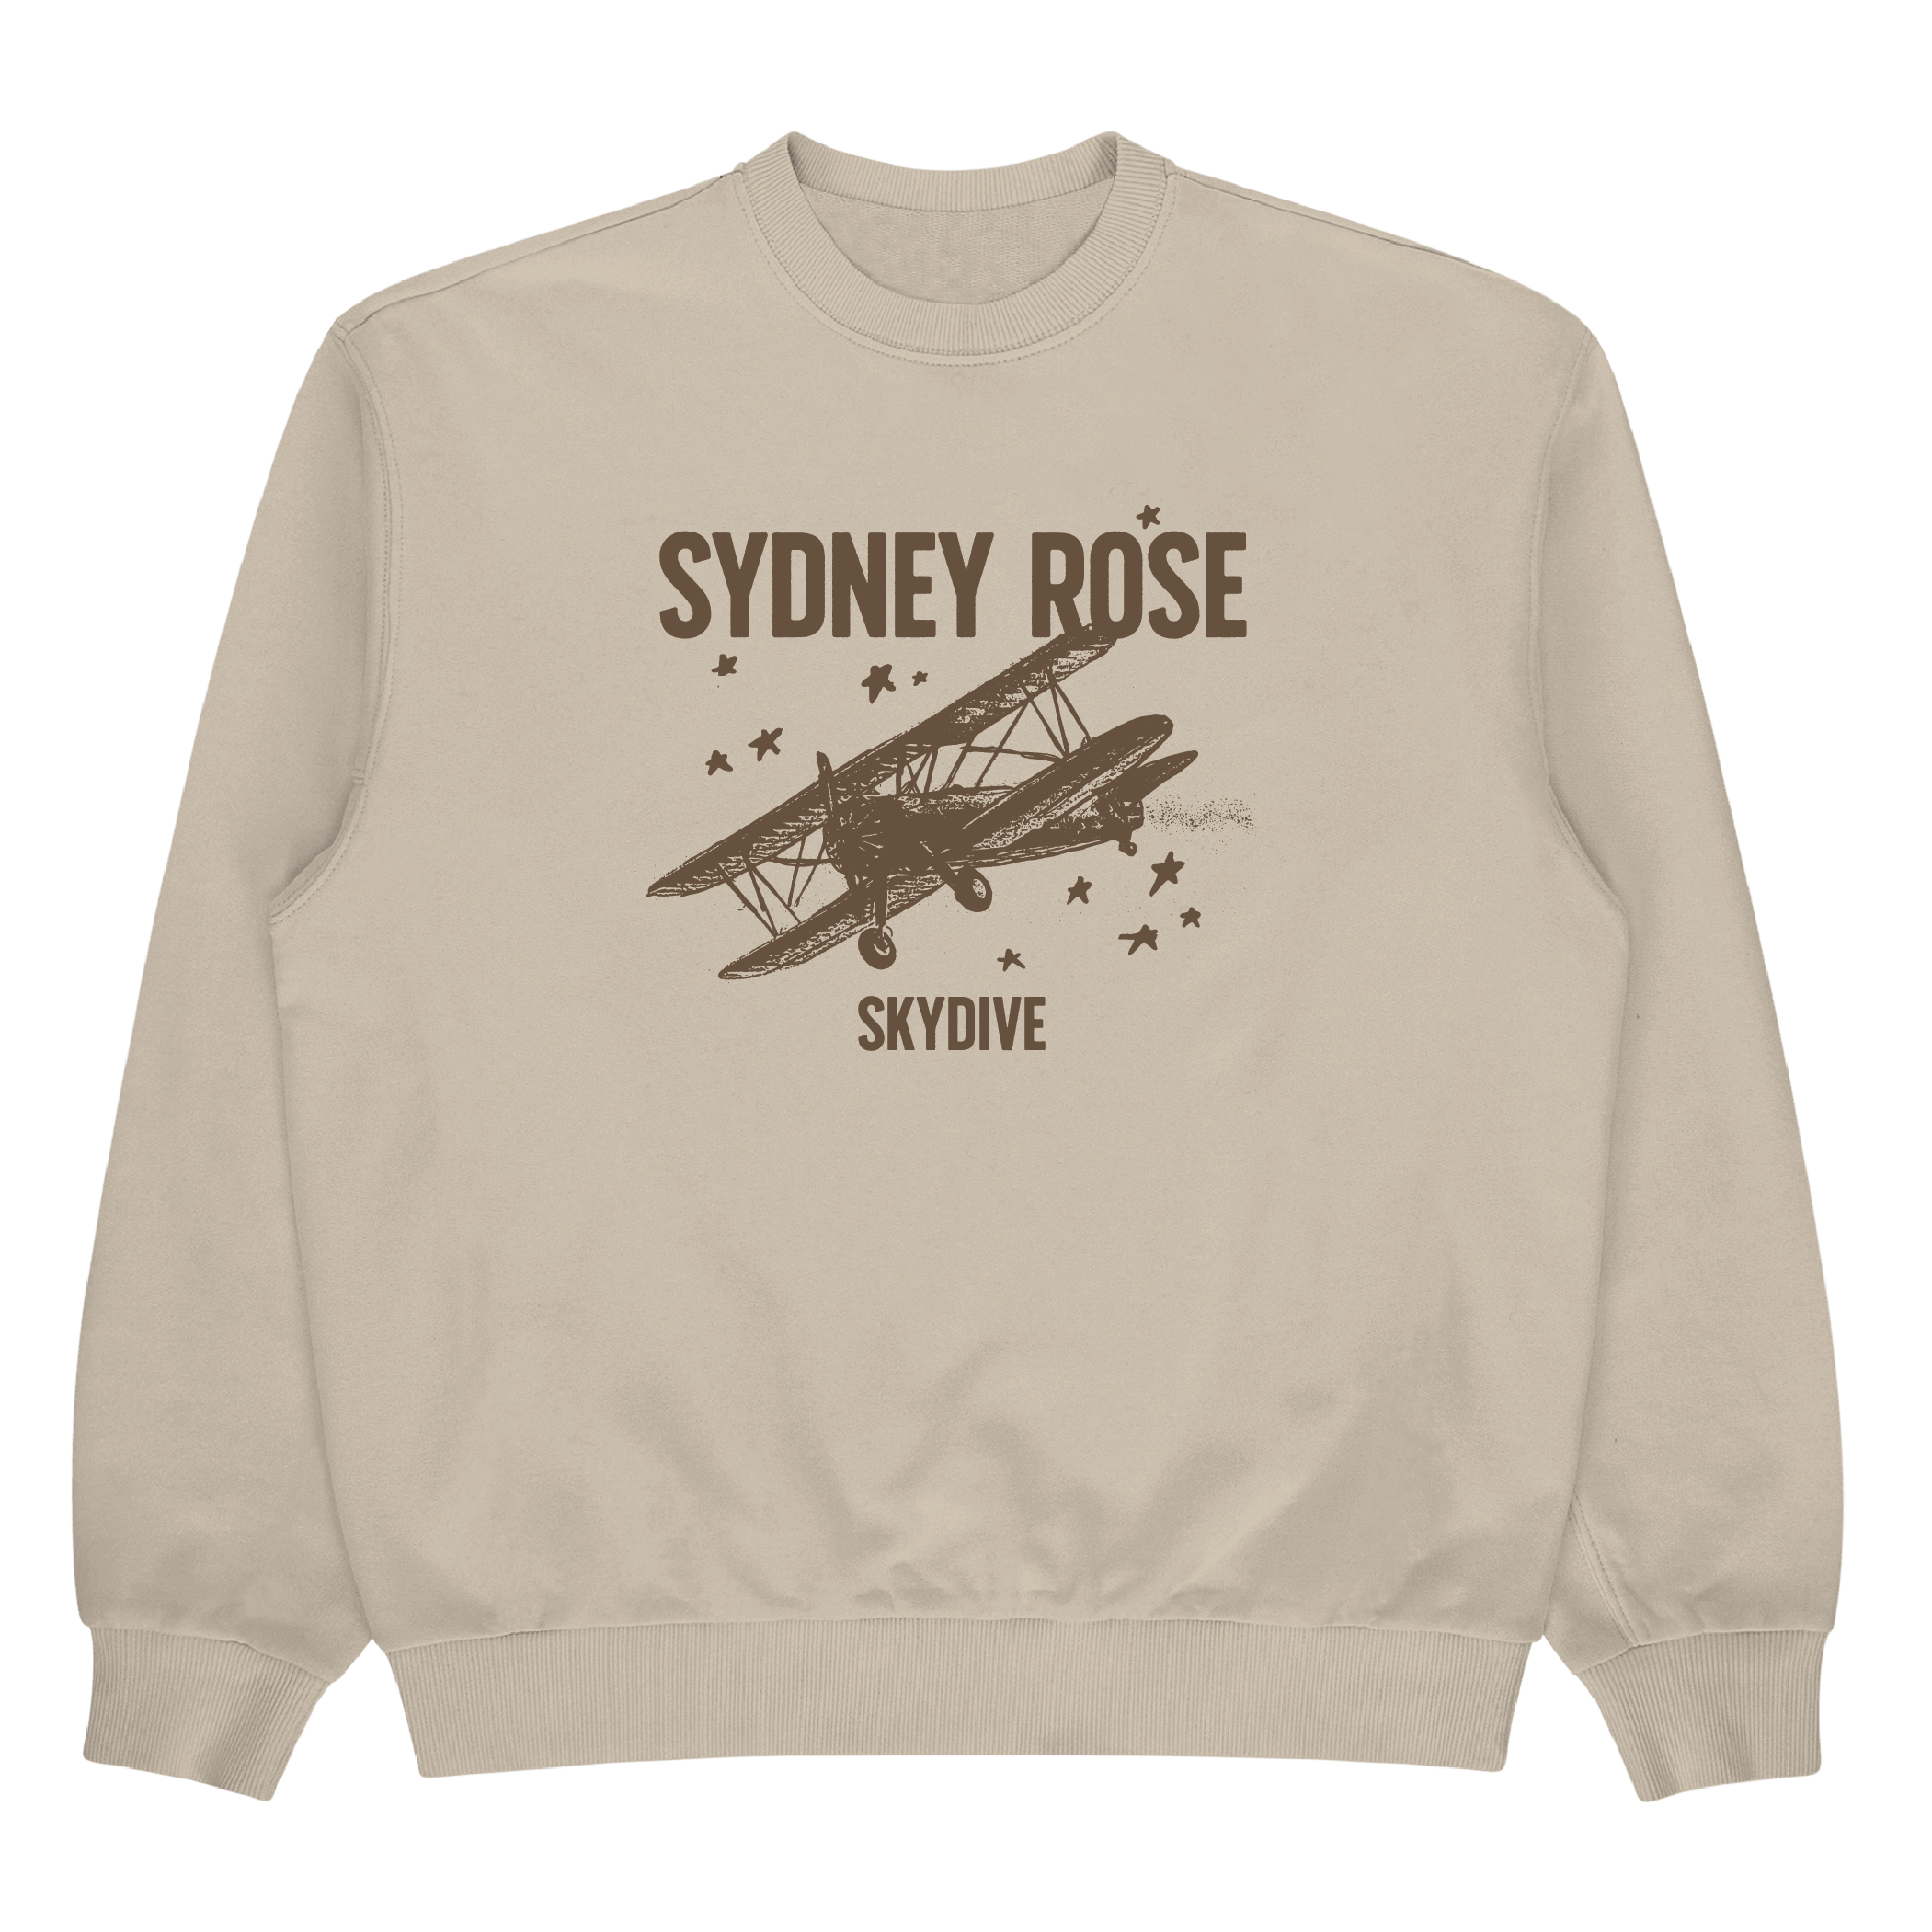 Sydney Rose - Skydive Crewneck